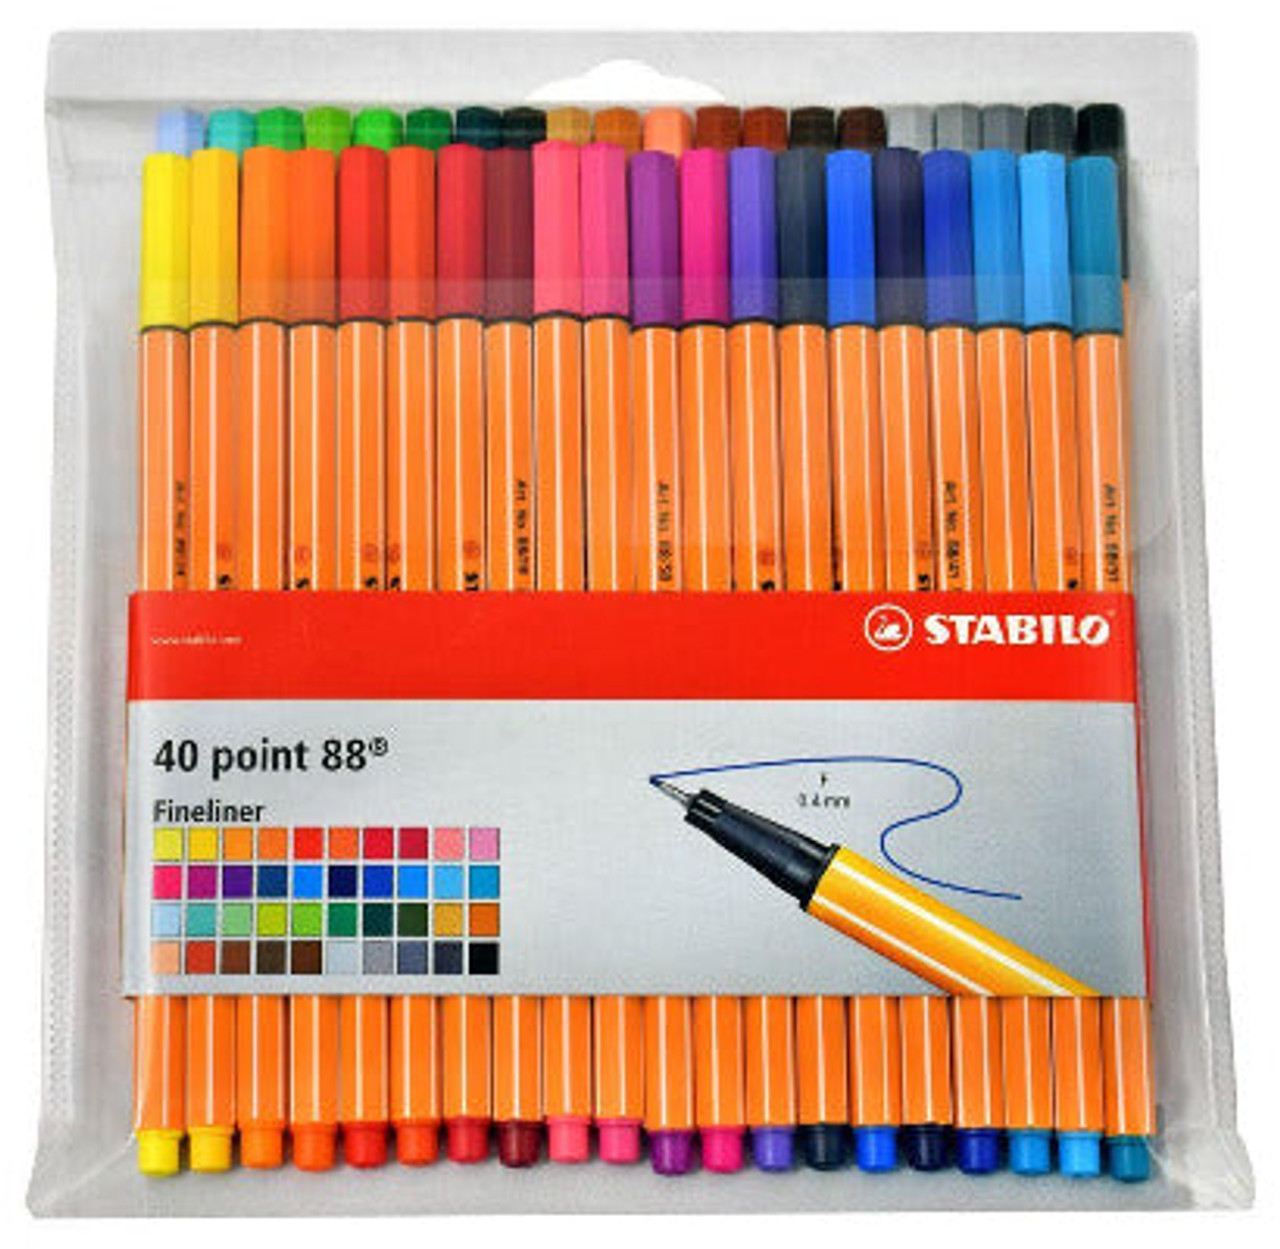 Stabilo 30 Point 88 Fineliner Markers Pens